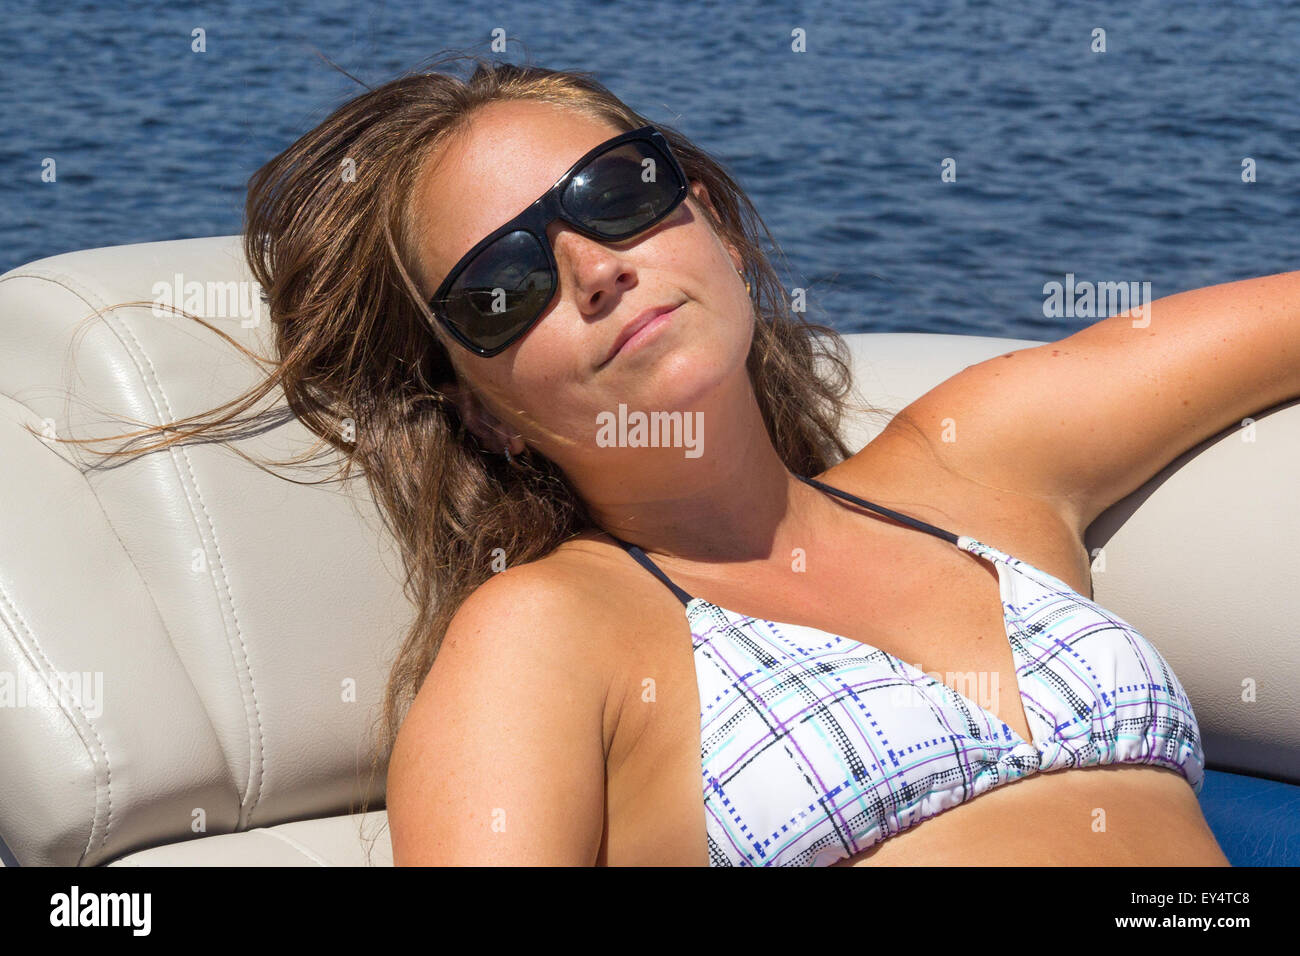 woman sunbathing on a boat Stock Photo